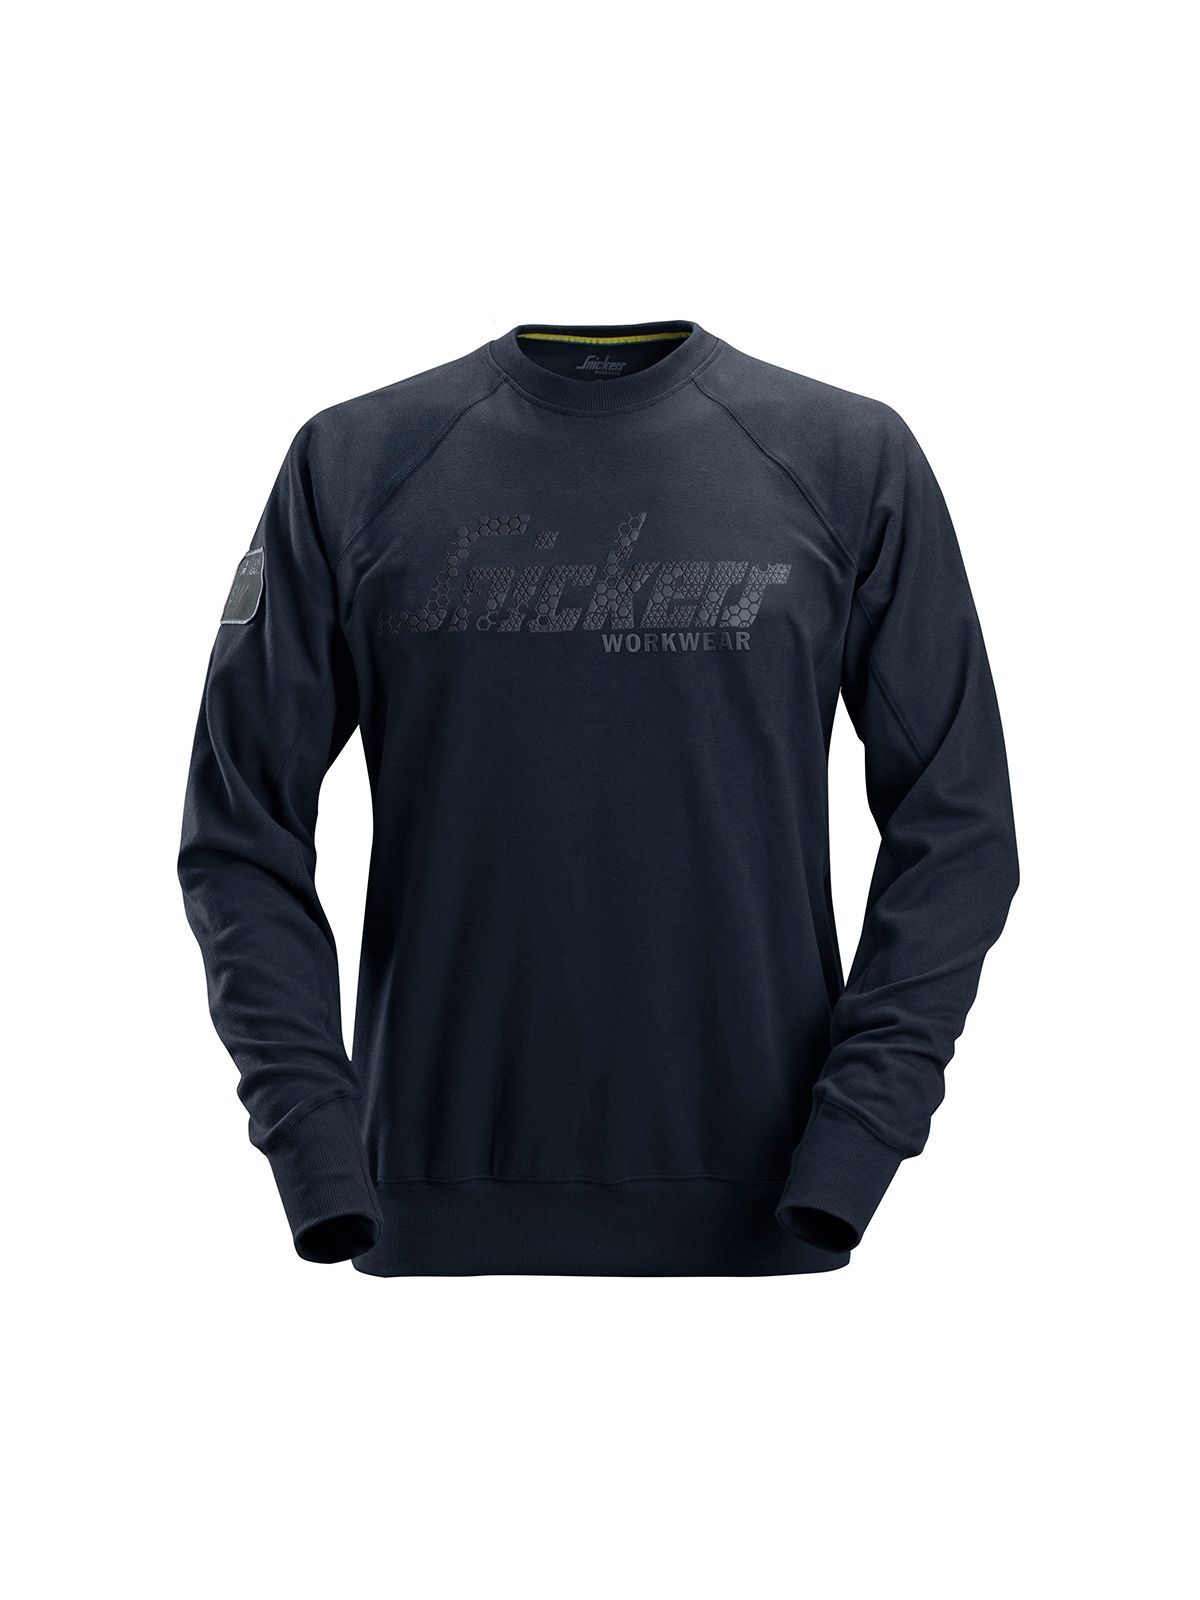 Snickers Workwear Sweatshirt OFFICIAL UK SUPPLIER 2810